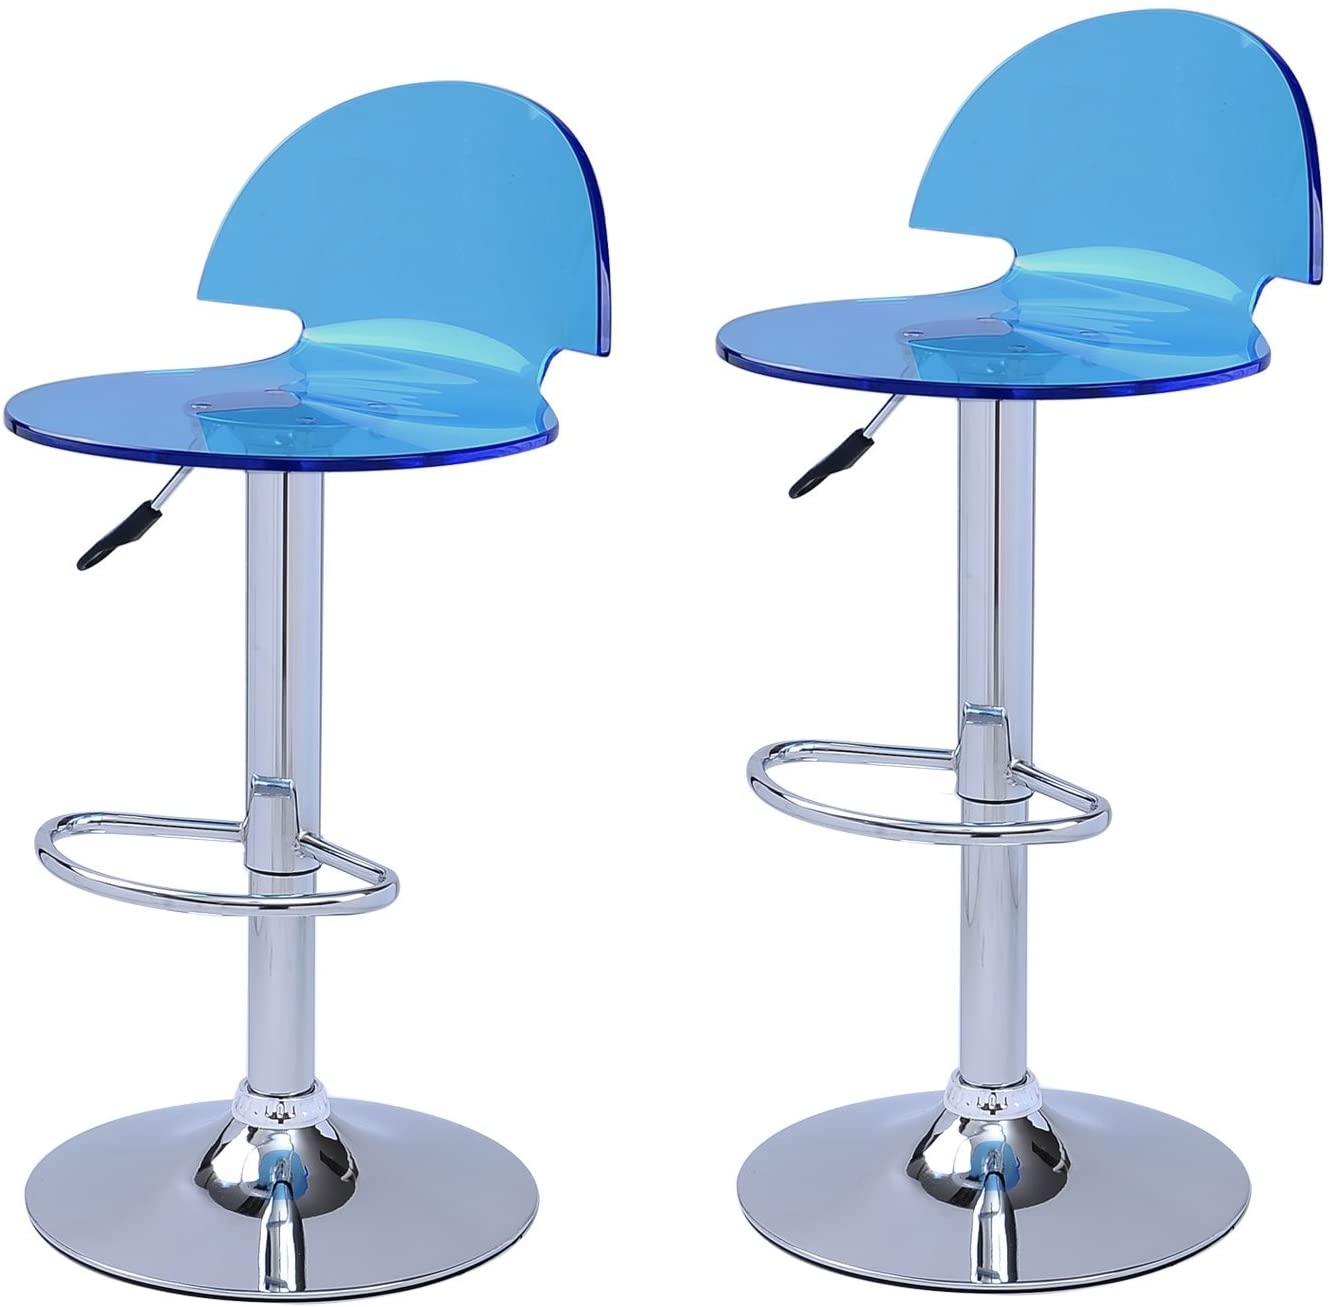 Adeco Blue Acrylic Hydraulic Lift Adjustable Barstool Chair Chrome Finish Pedestal Base (Set of two)